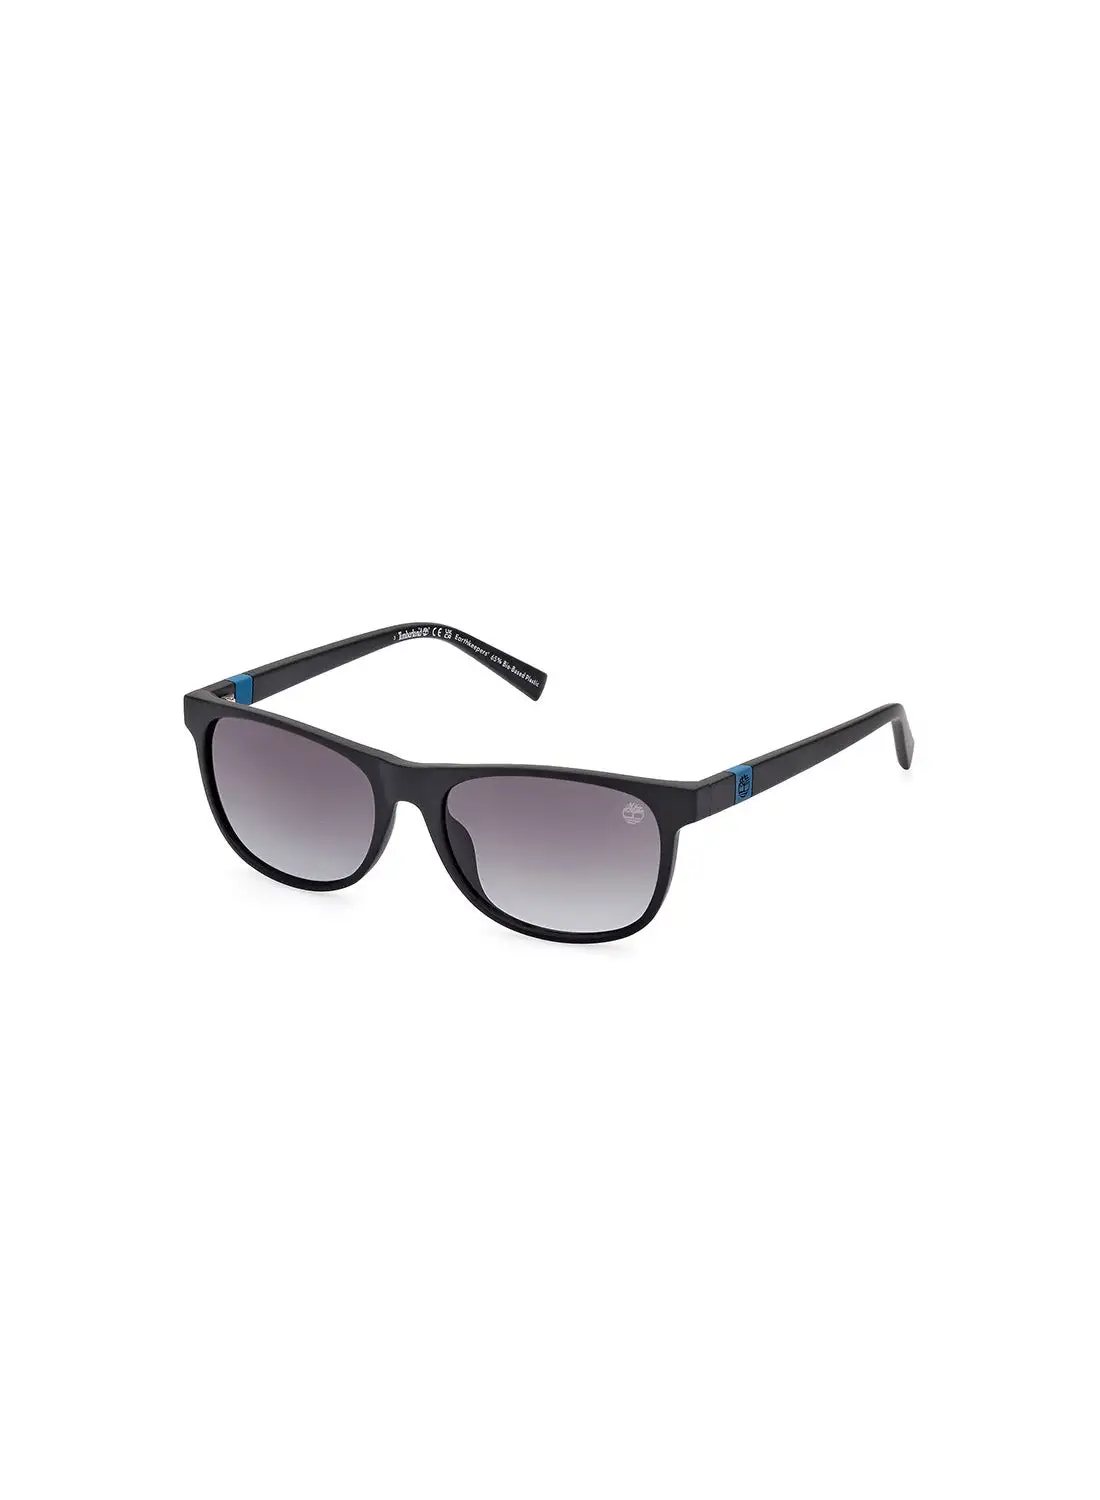 Timberland Men's UV Protection Rectangular Sunglasses - TB932702B52 - Lens Size: 52 Mm